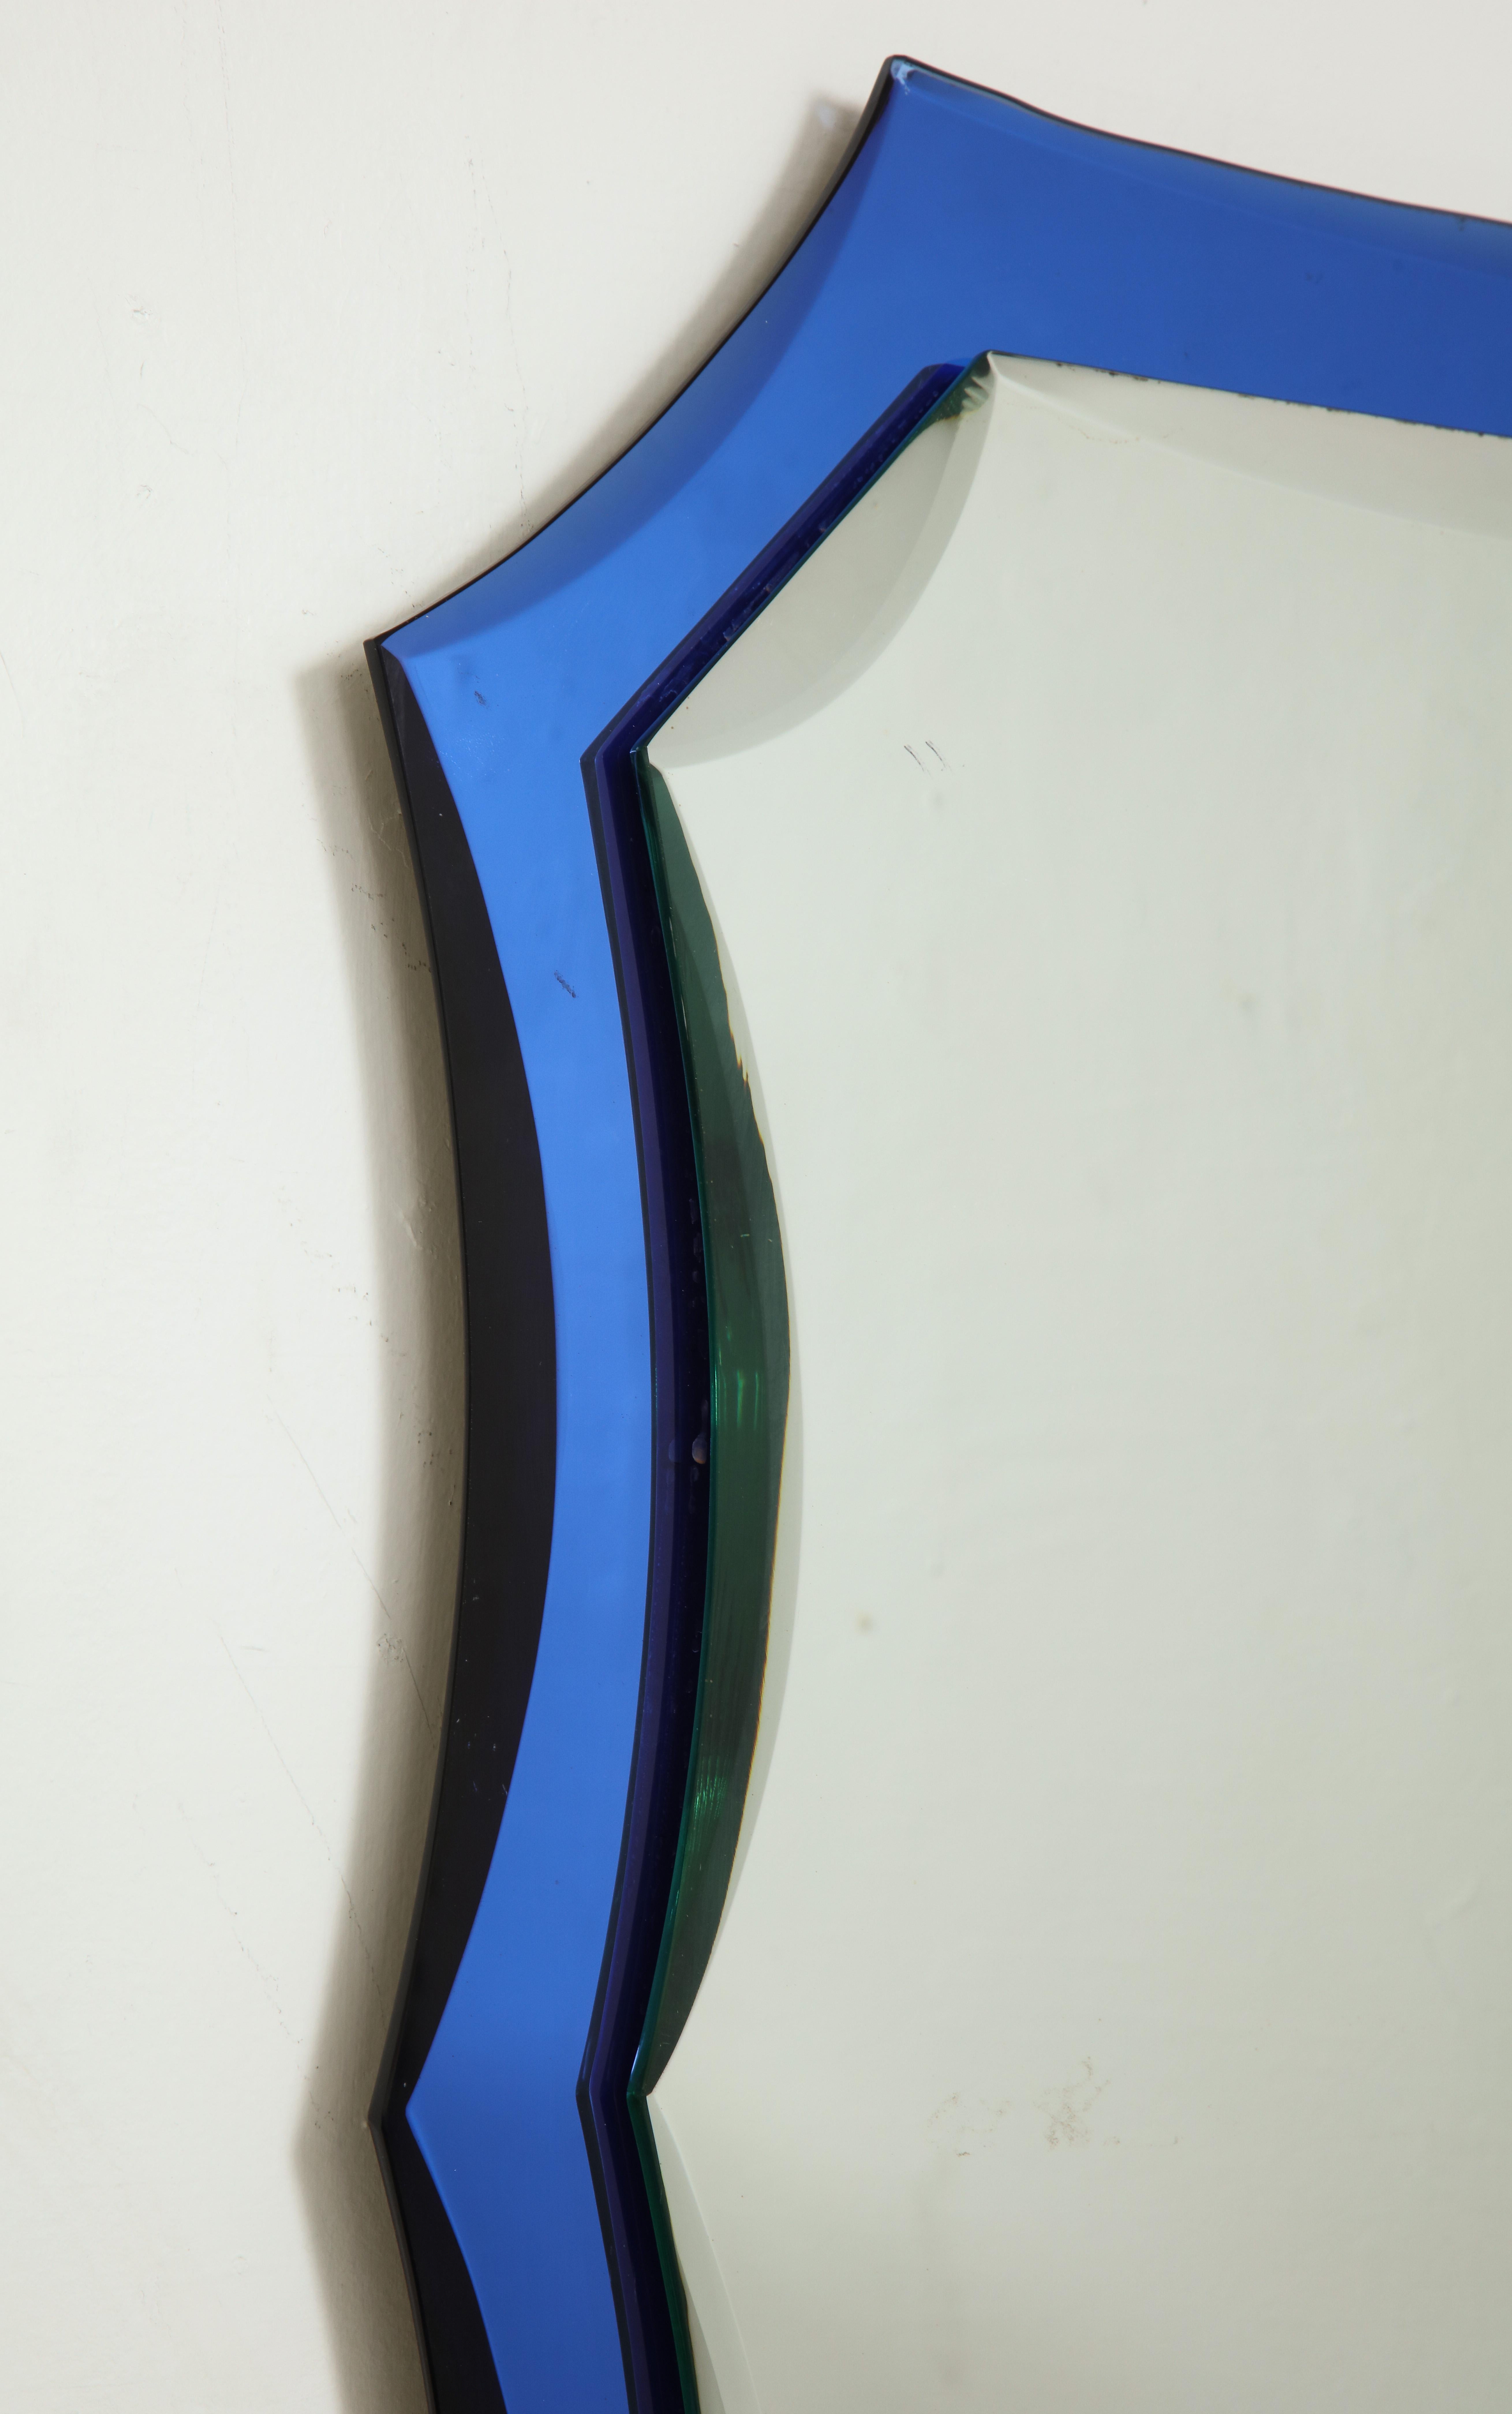 Vintage mirror with cobalt blue borders.